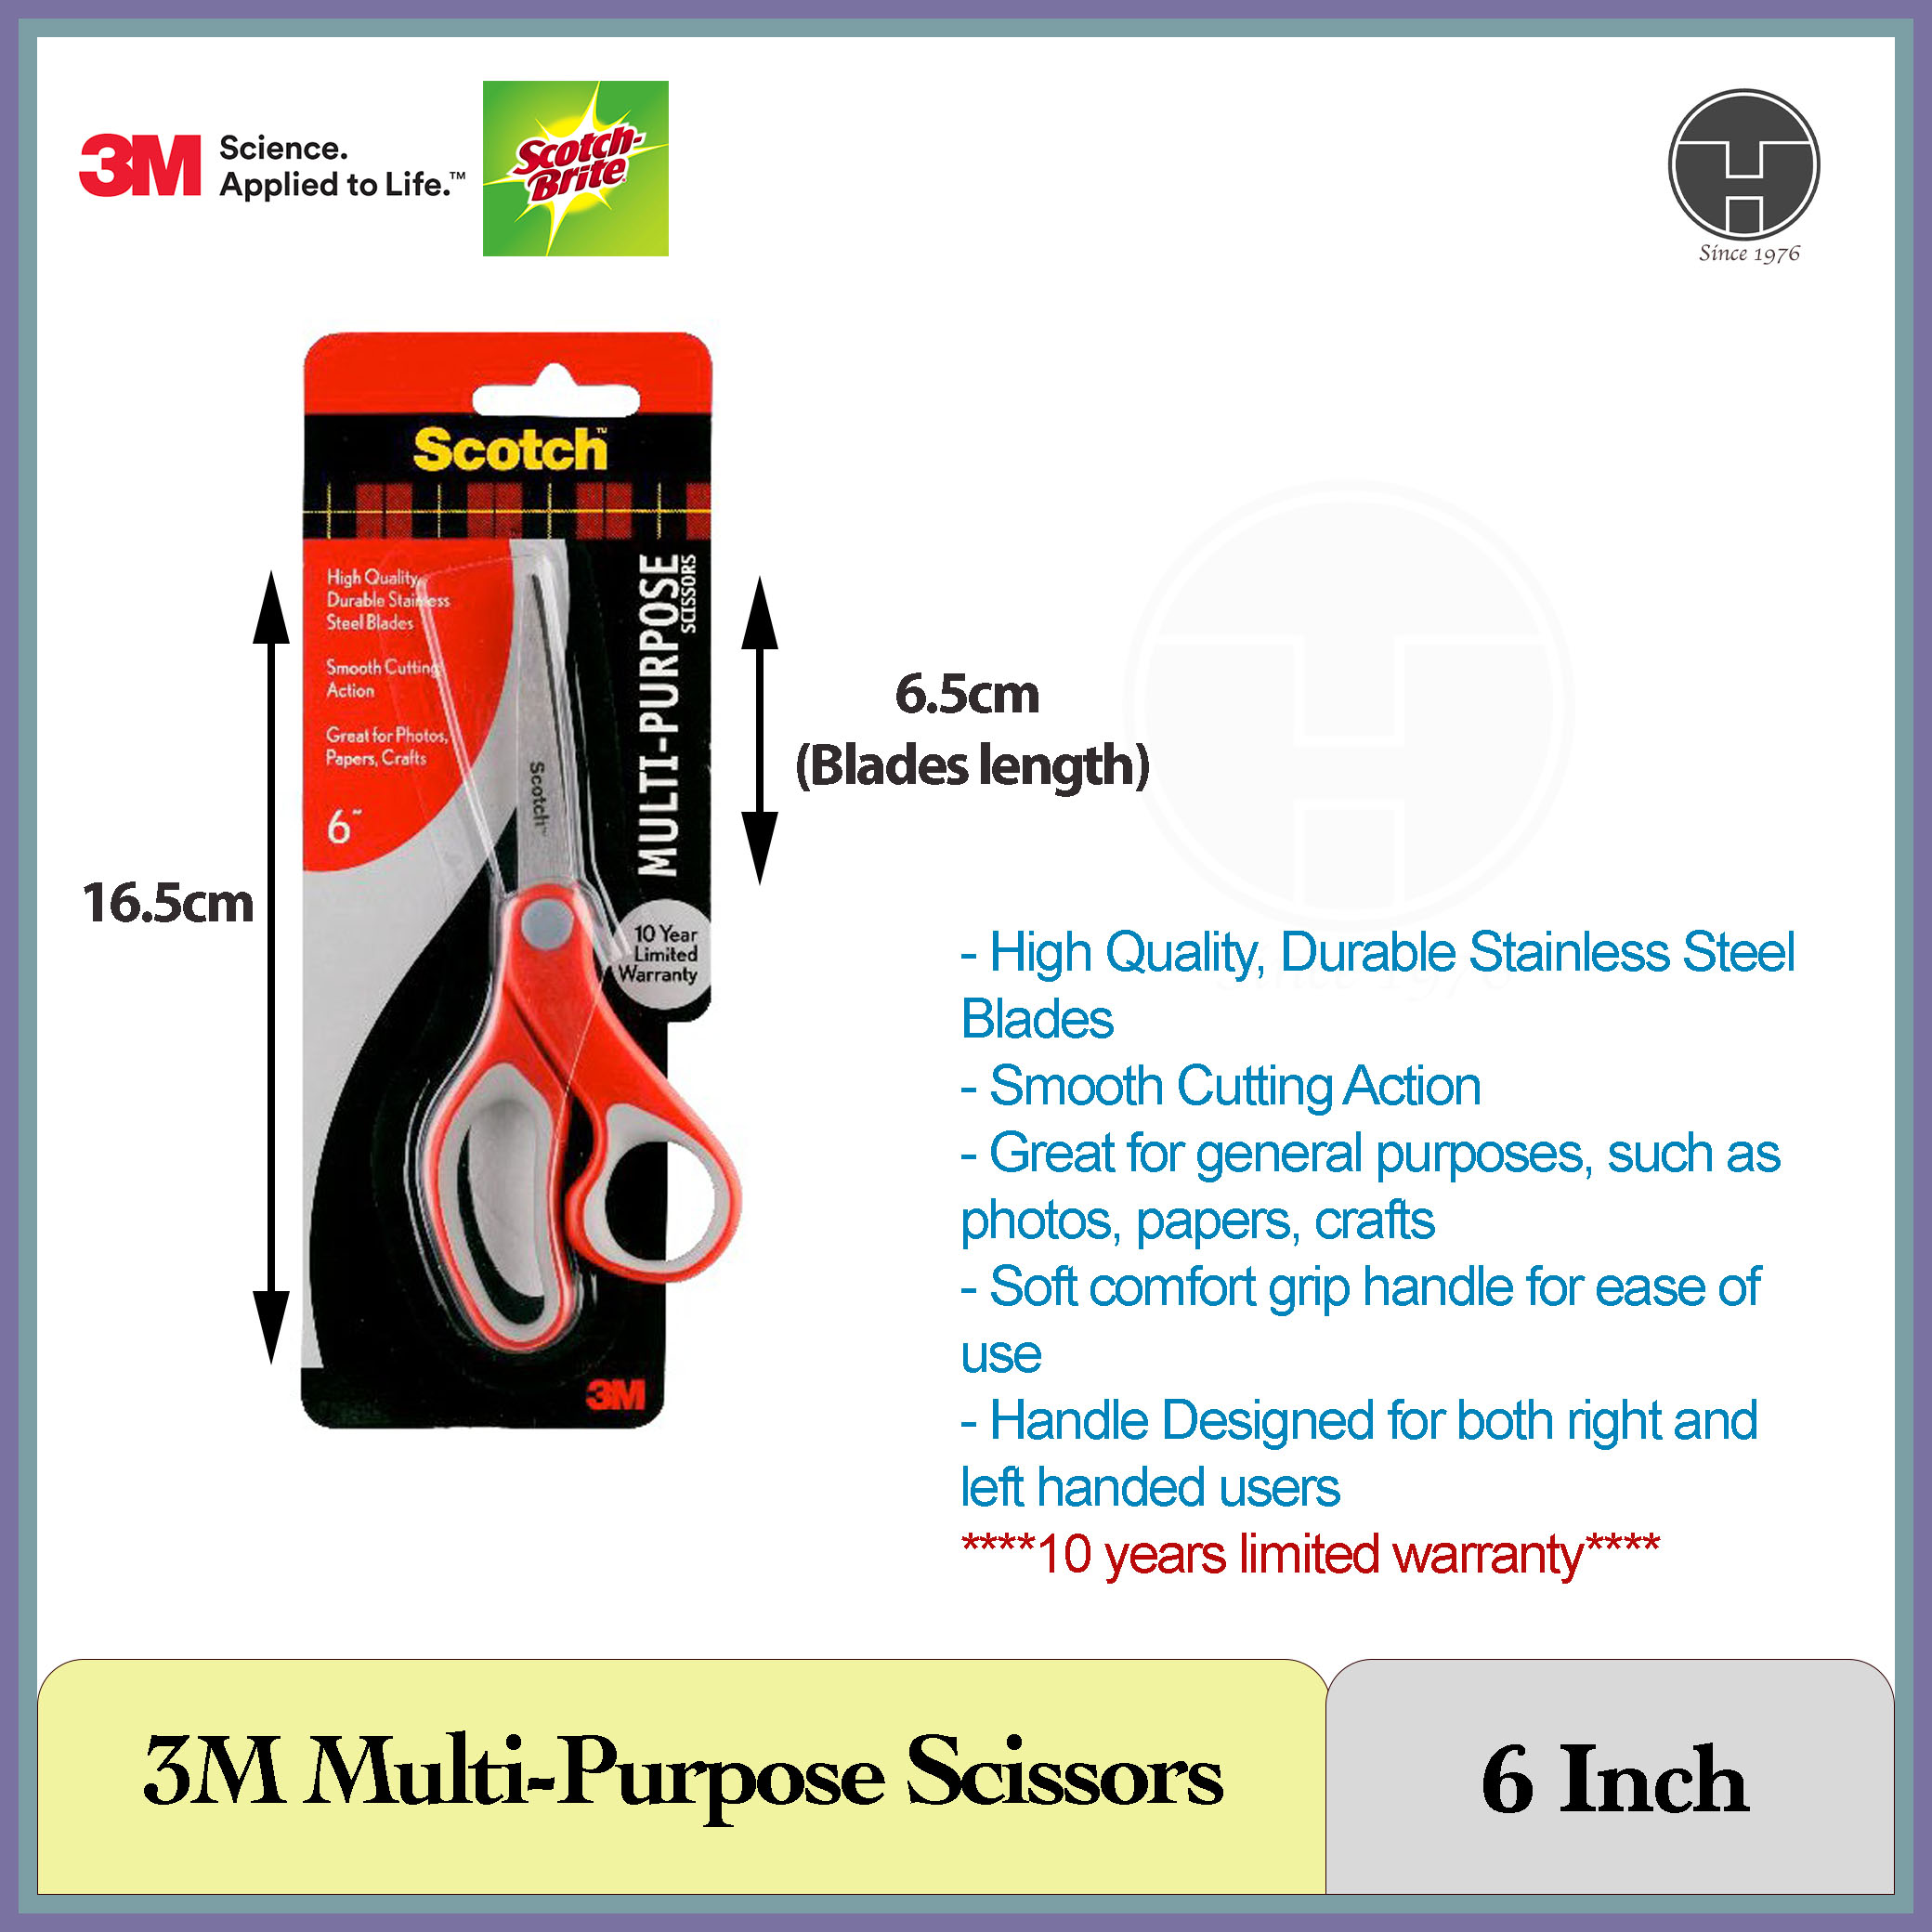 Scotch 6 Multi-Purpose Scissors, Great for Everyday Use (1426)